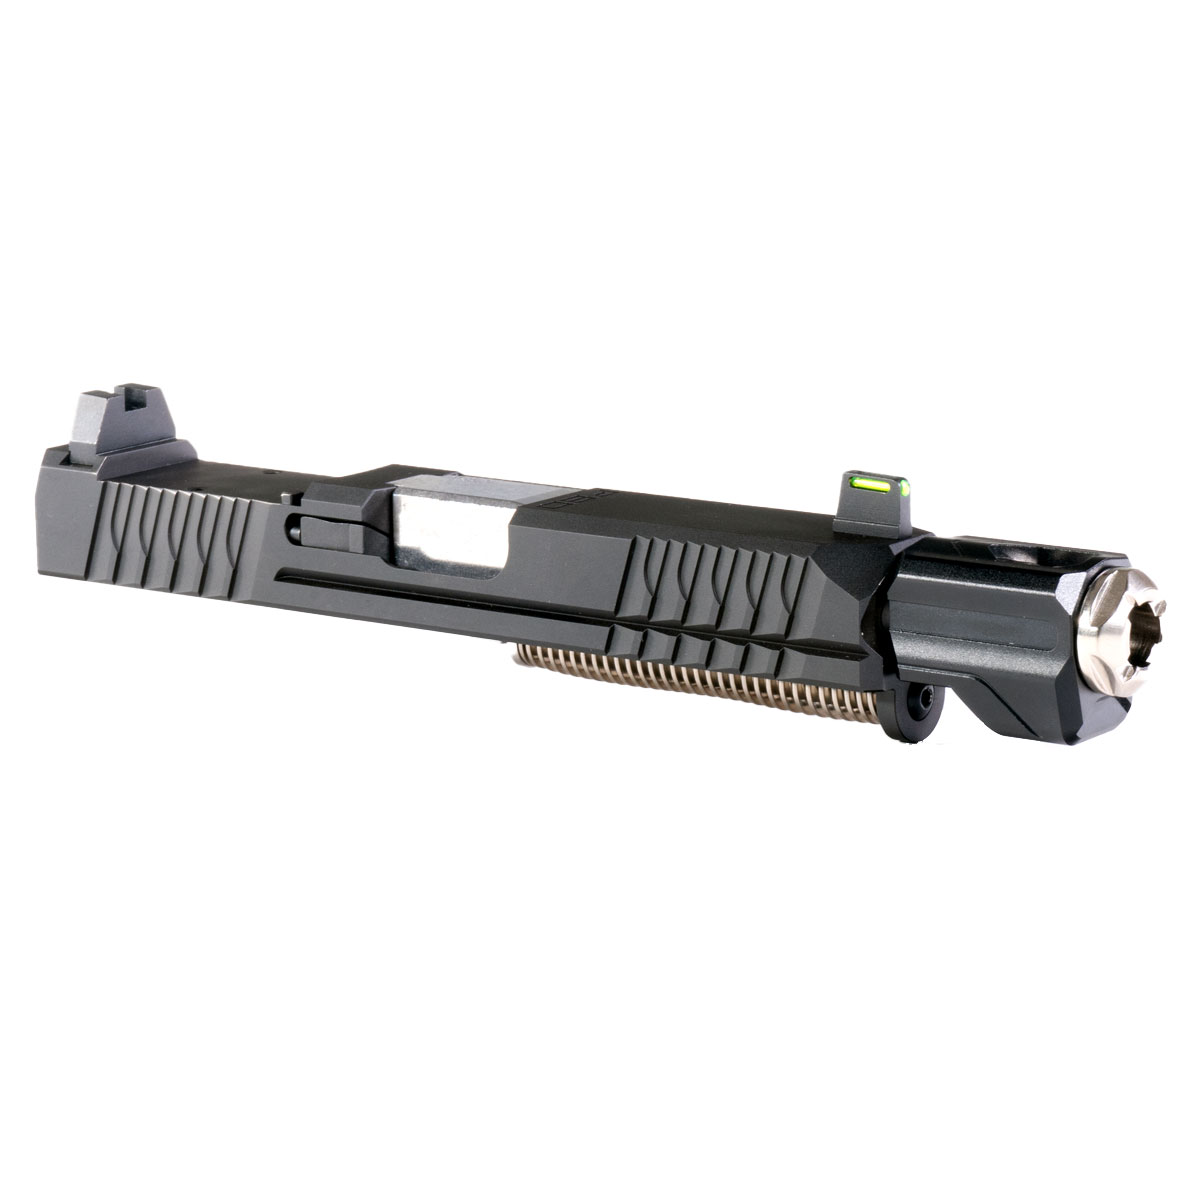 DD 'Iron Fist' 9mm Complete Slide Kit - Glock 19 Gen 1-3 Compatible